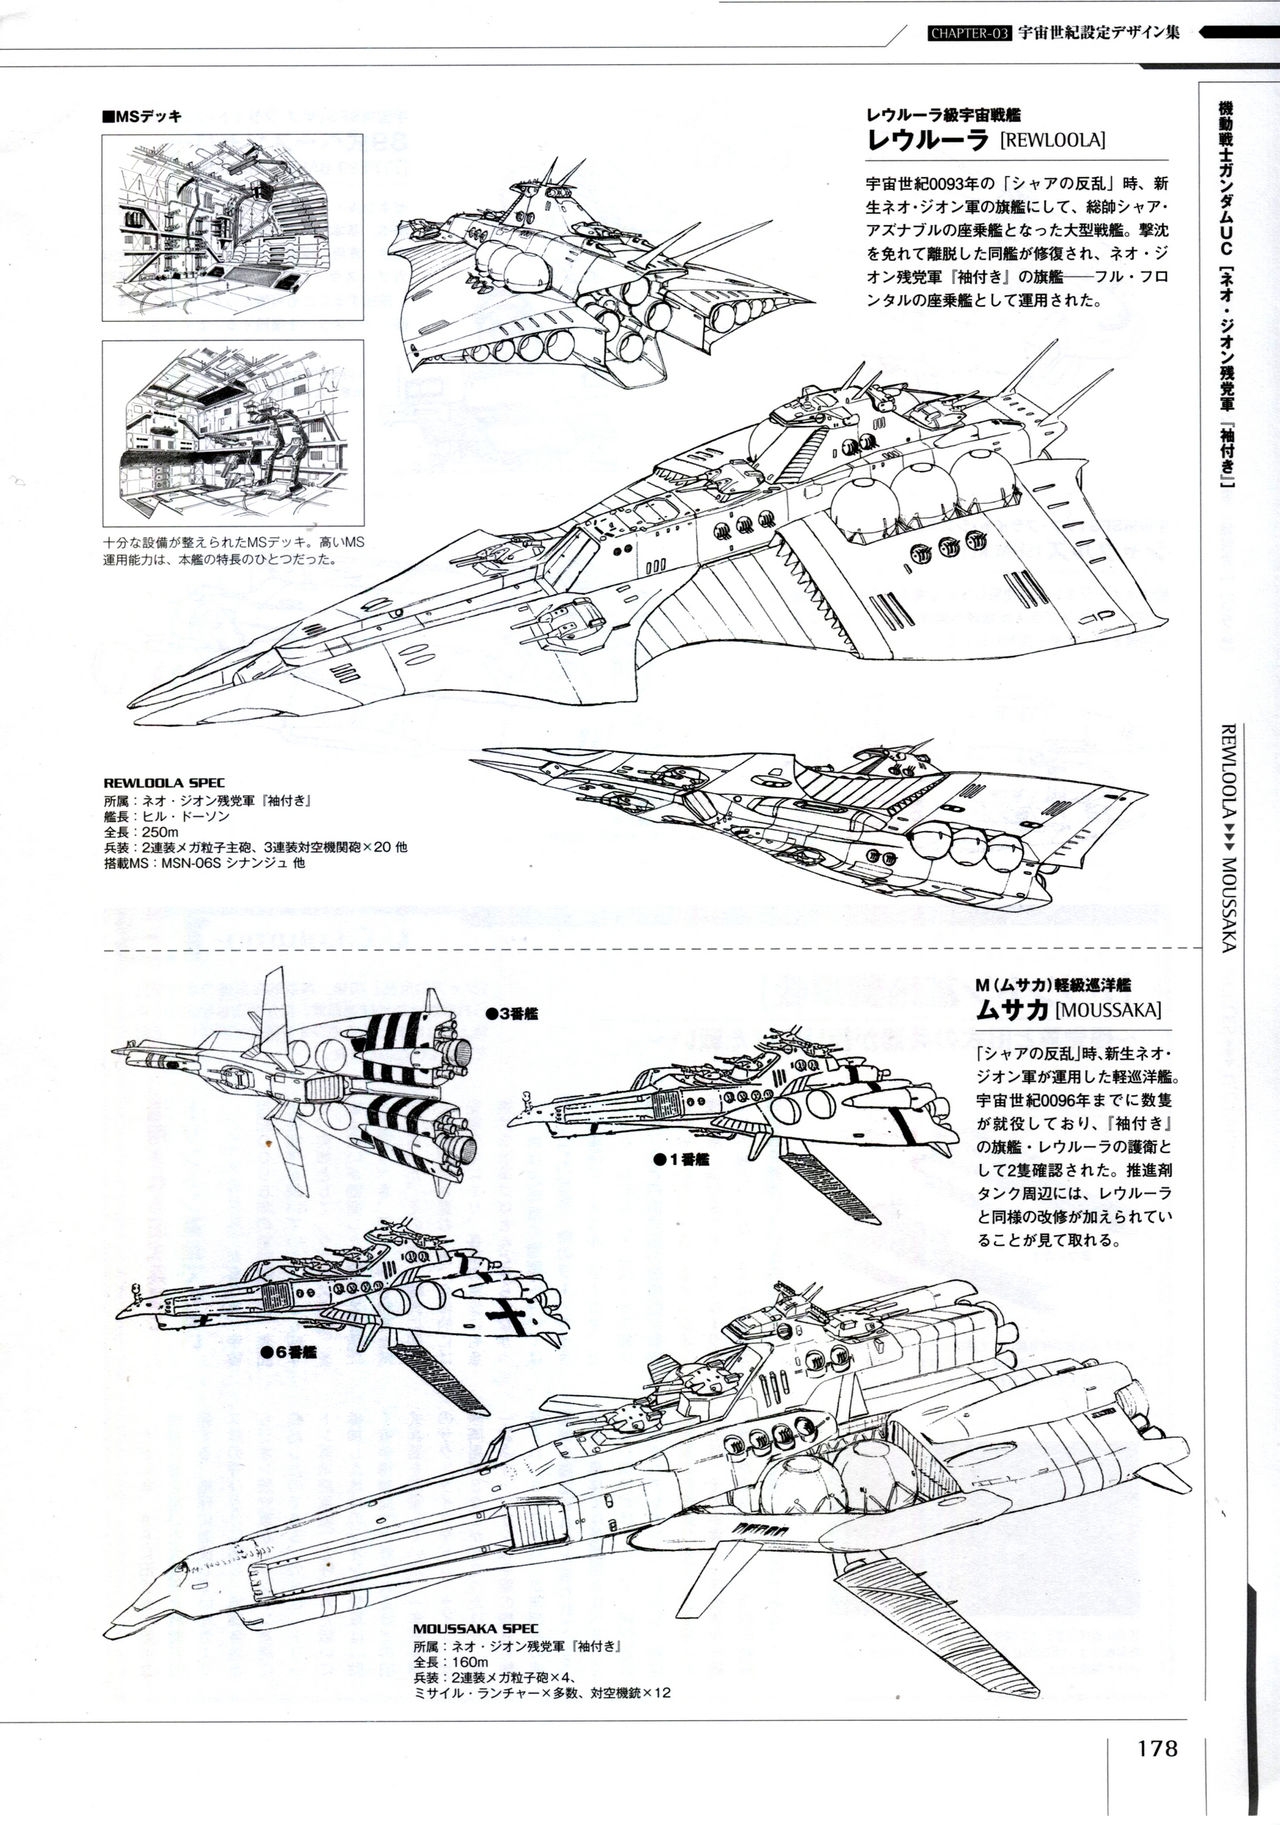 Mobile Suit Gundam - Ship & Aerospace Plane Encyclopedia - Revised Edition 183